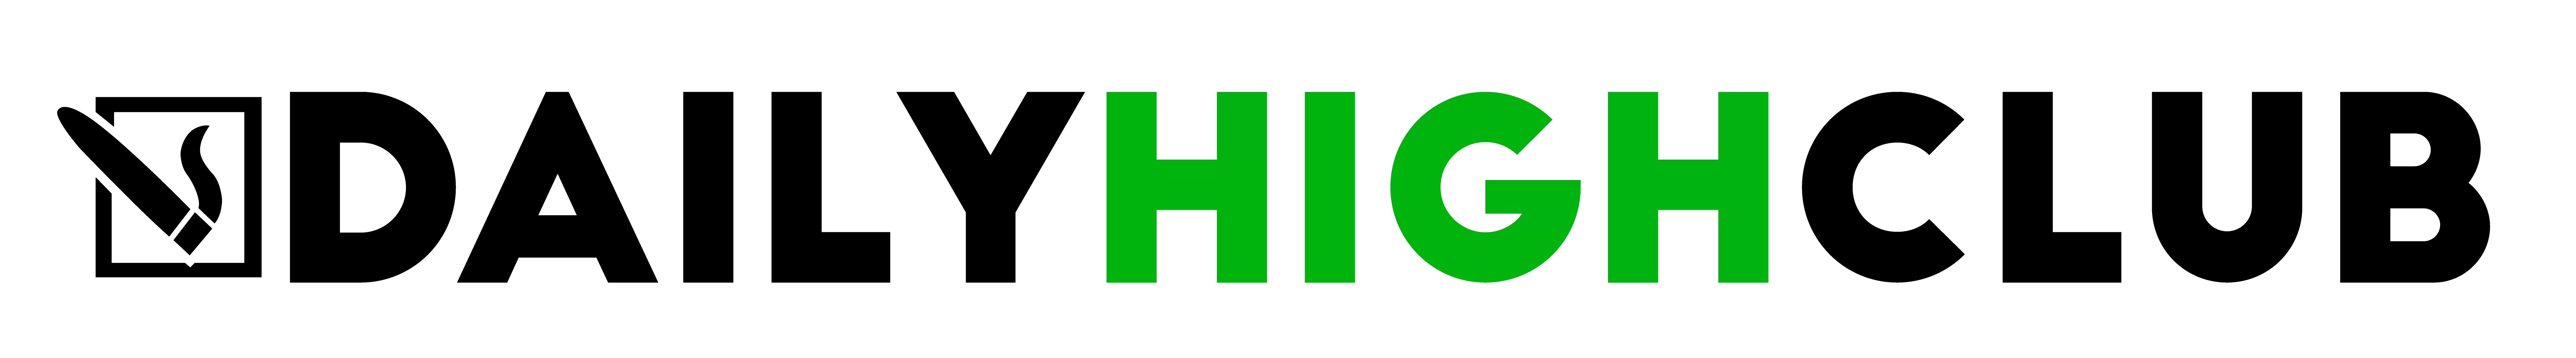 Daily High Club logo for a PR Case Study.